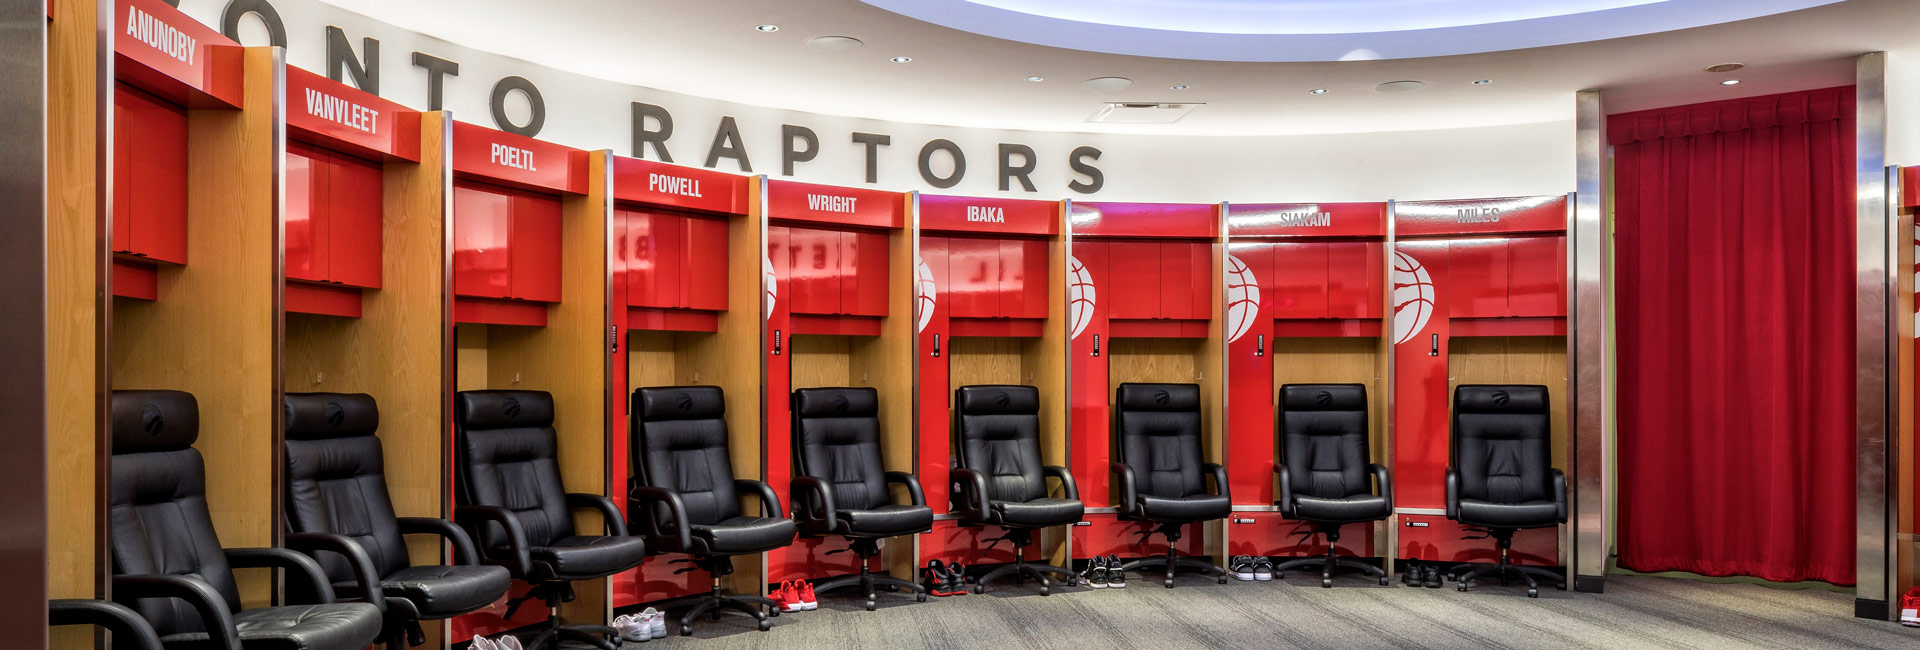 Toronto Raptors Locker Room